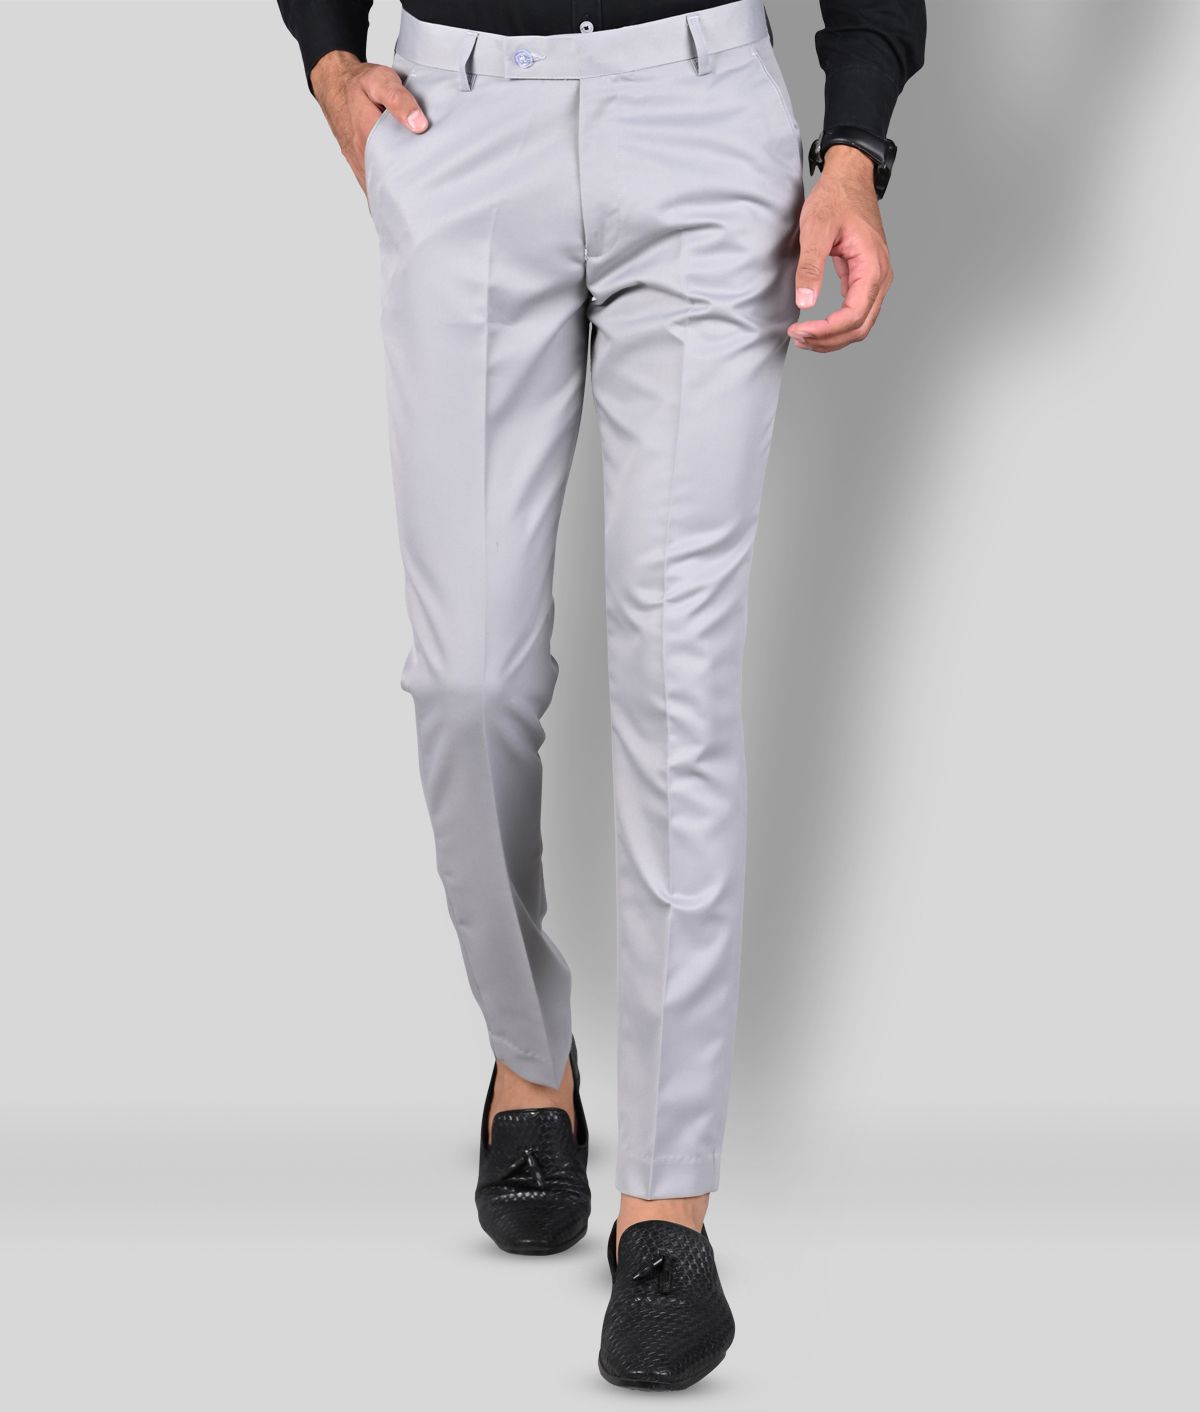     			MANCREW - Grey Polycotton Slim - Fit Men's Formal Pants ( Pack of 1 )